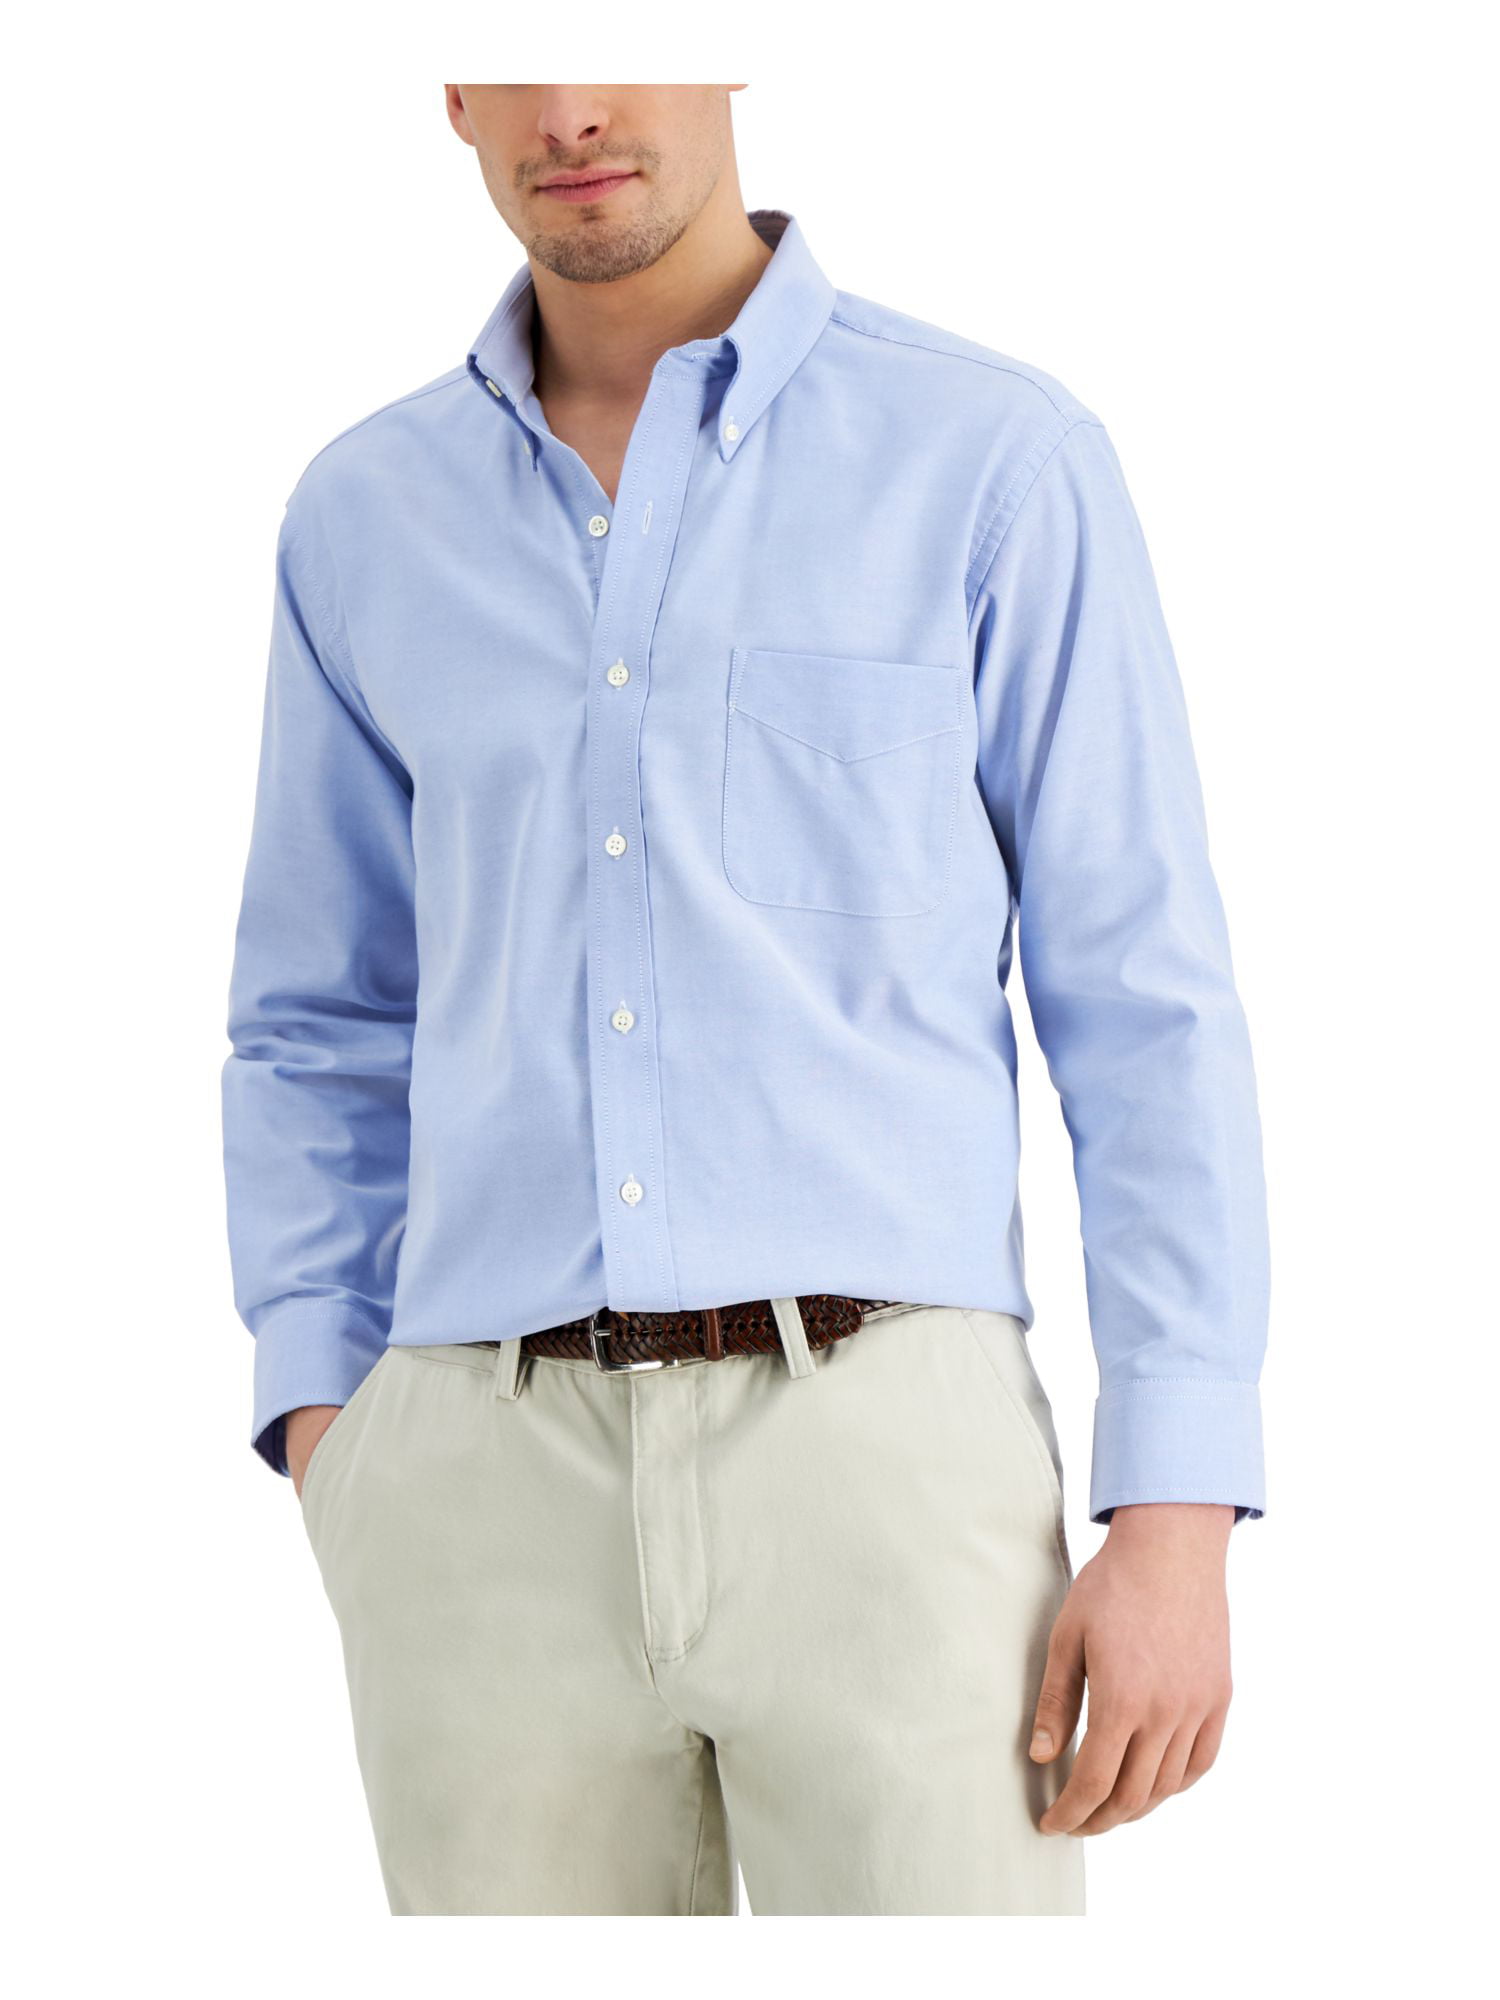 YUSKY Mens Slim Long Sleeve Striped Button Business Formal Western Shirt